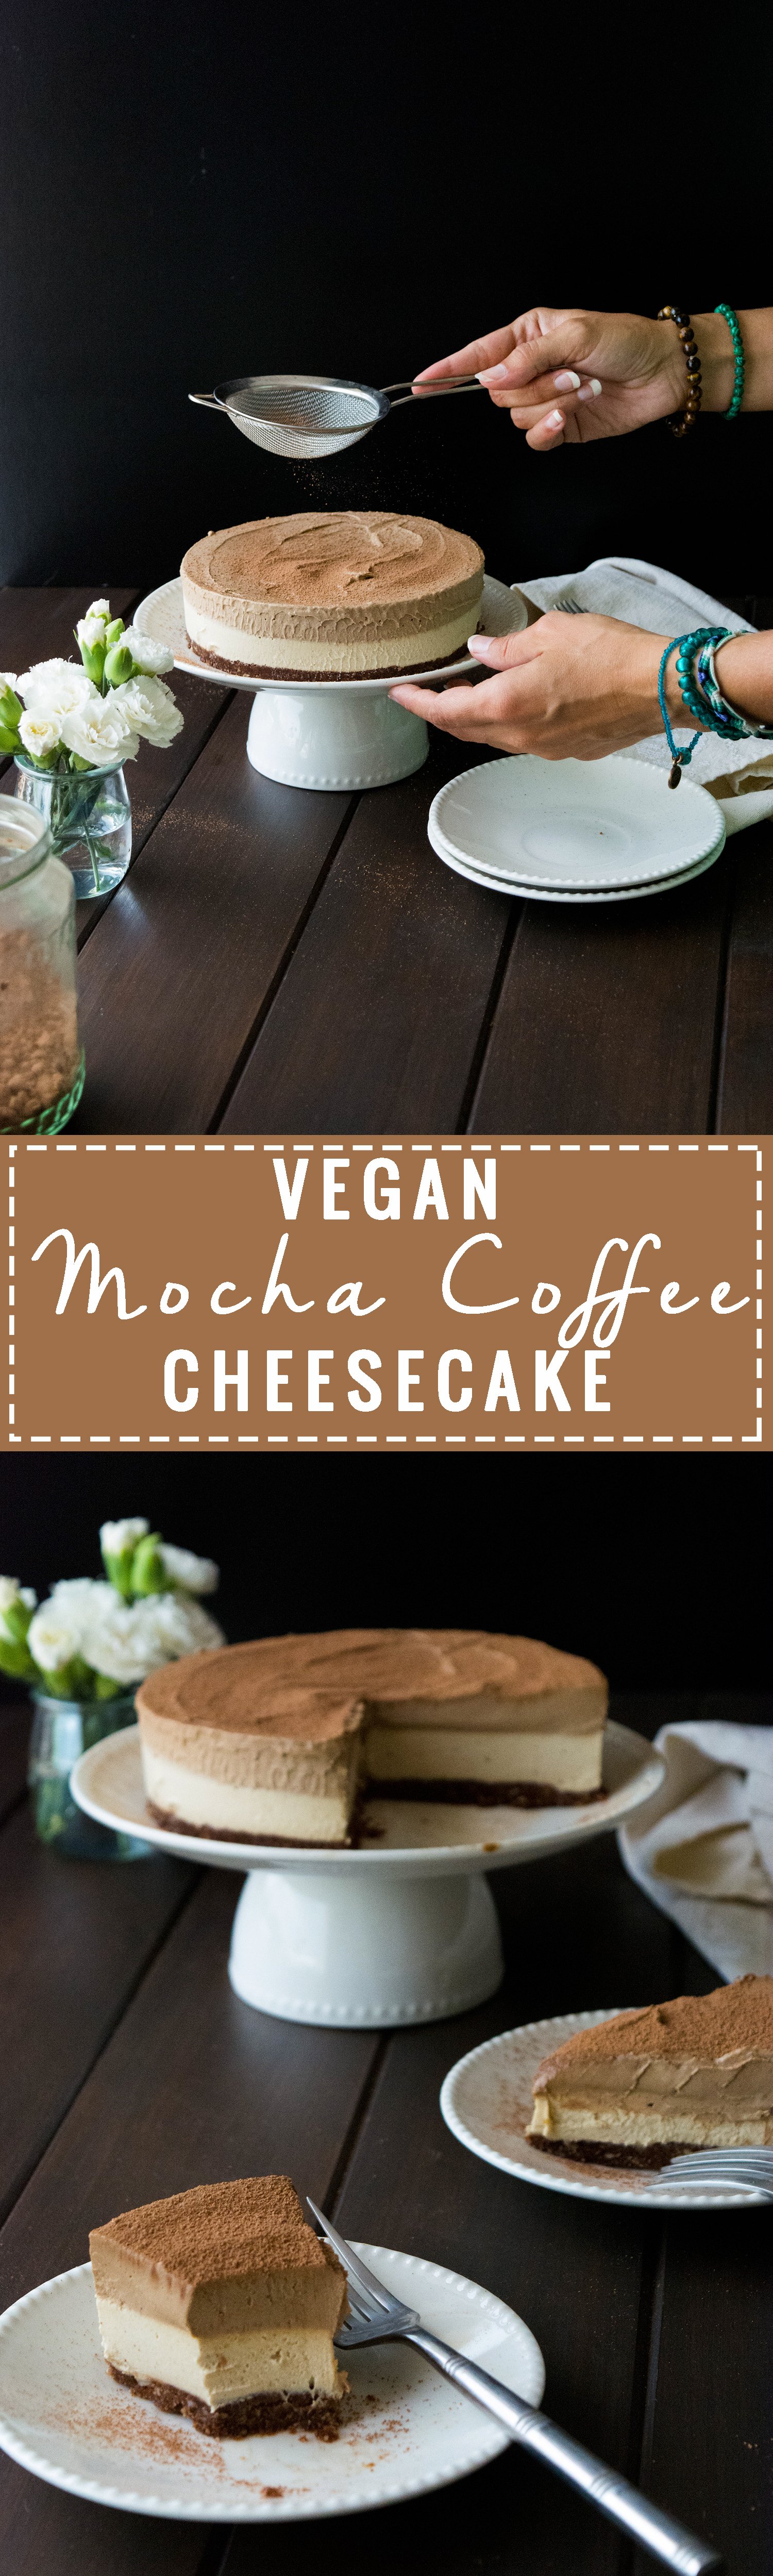 Mocha Coffee Cheesecake